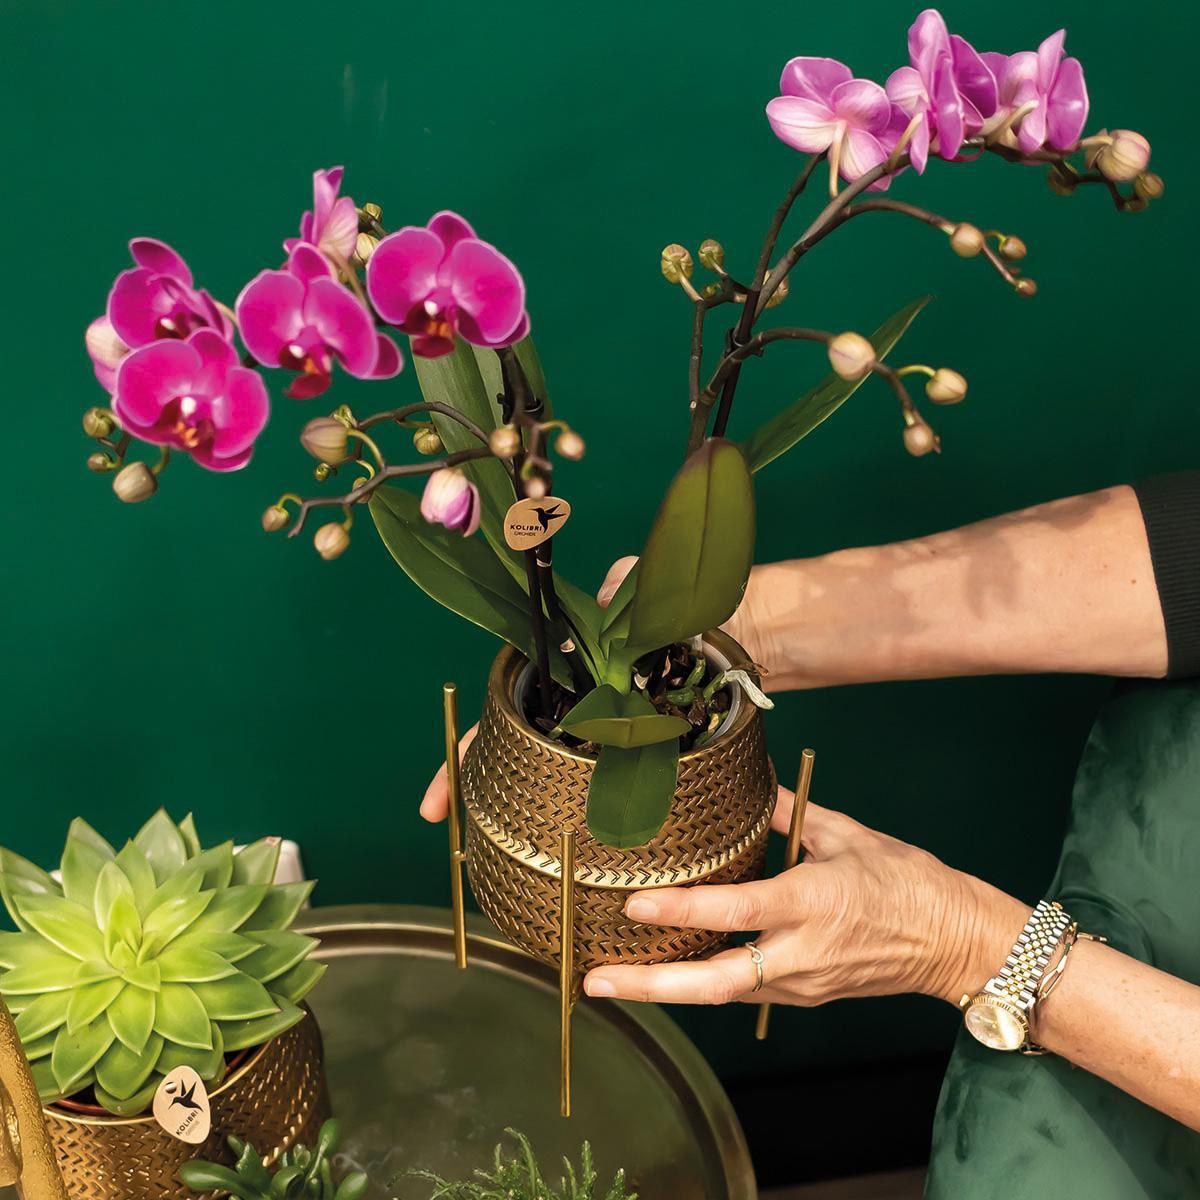 Kolibri Orchids | Roze Phalaenopsis orchidee – Treviso in Groove pot goud – potmaat Ø12cm – 35cm hoog | bloeiende kamerplant in bloempot - vers van de kweker